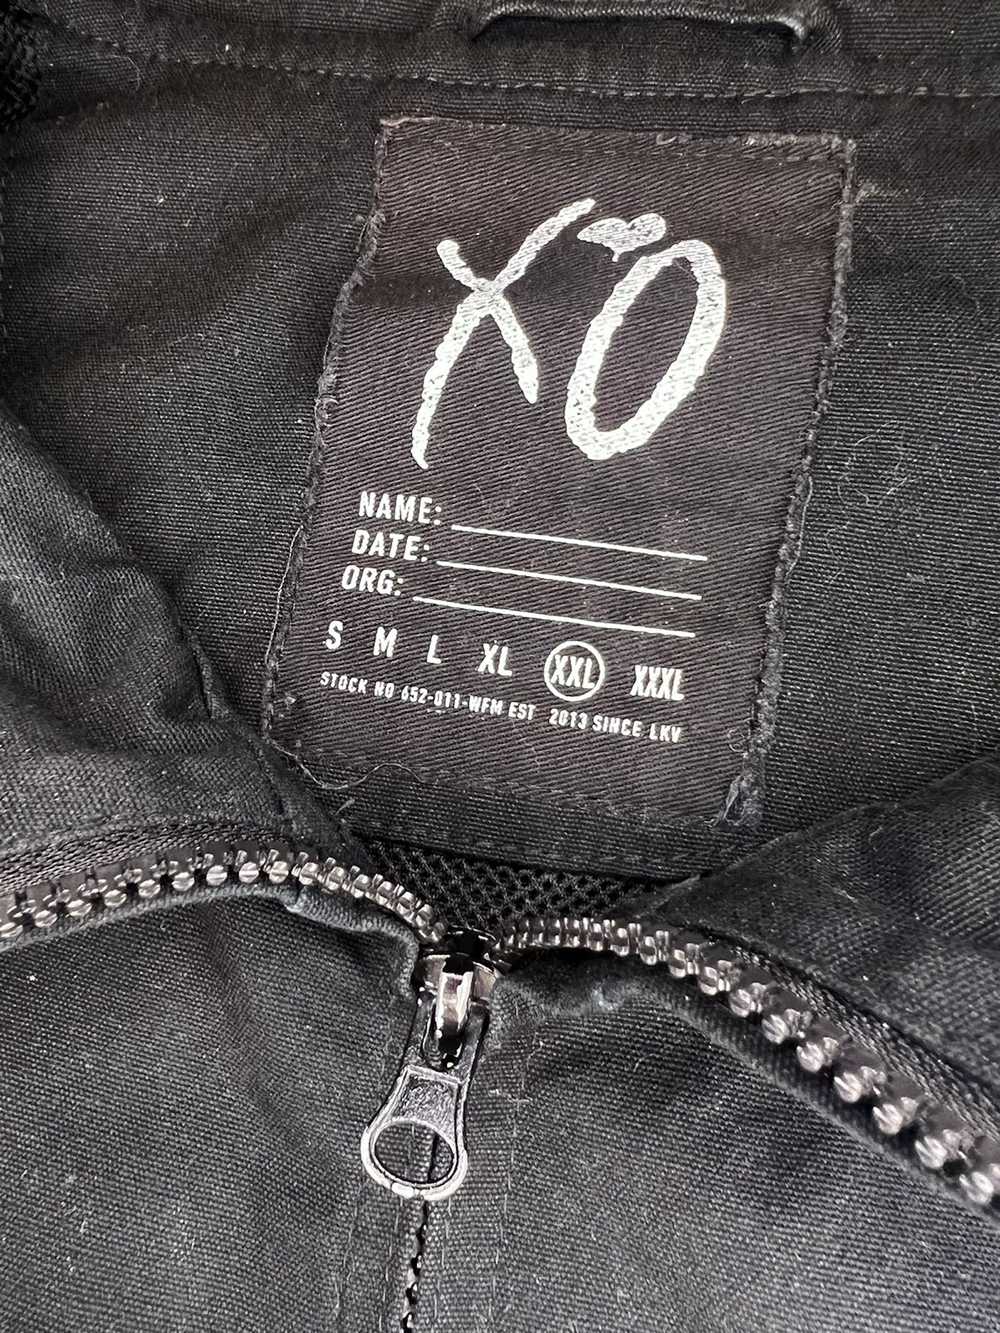 XO The Weeknd Starboy World Tour Jacket size 2XL - image 7